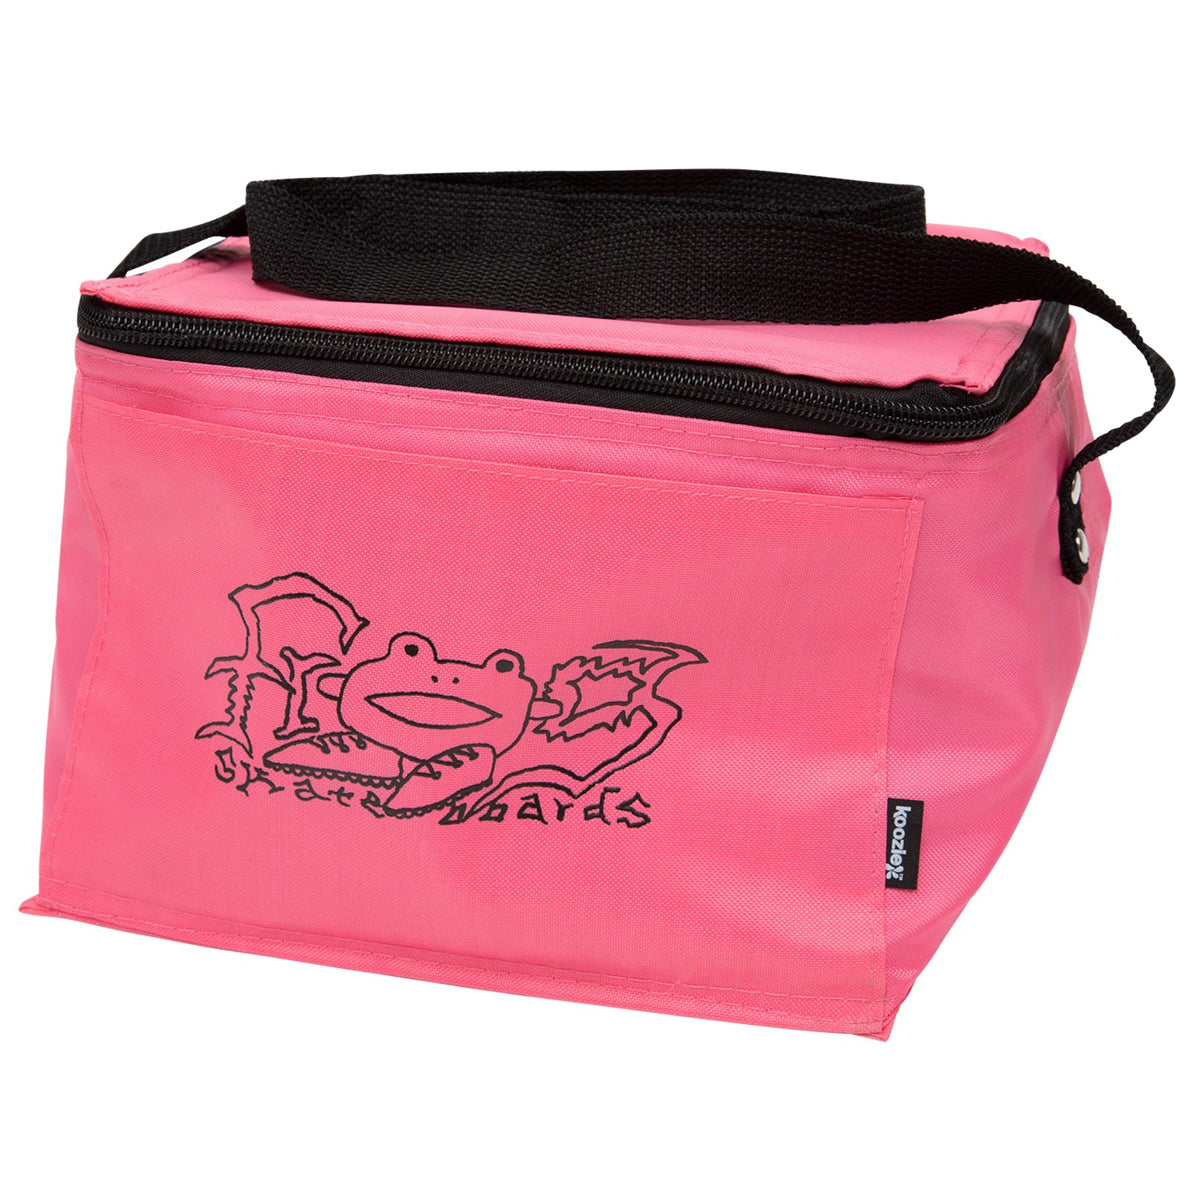 Frog Lunchbox - Pink image 1